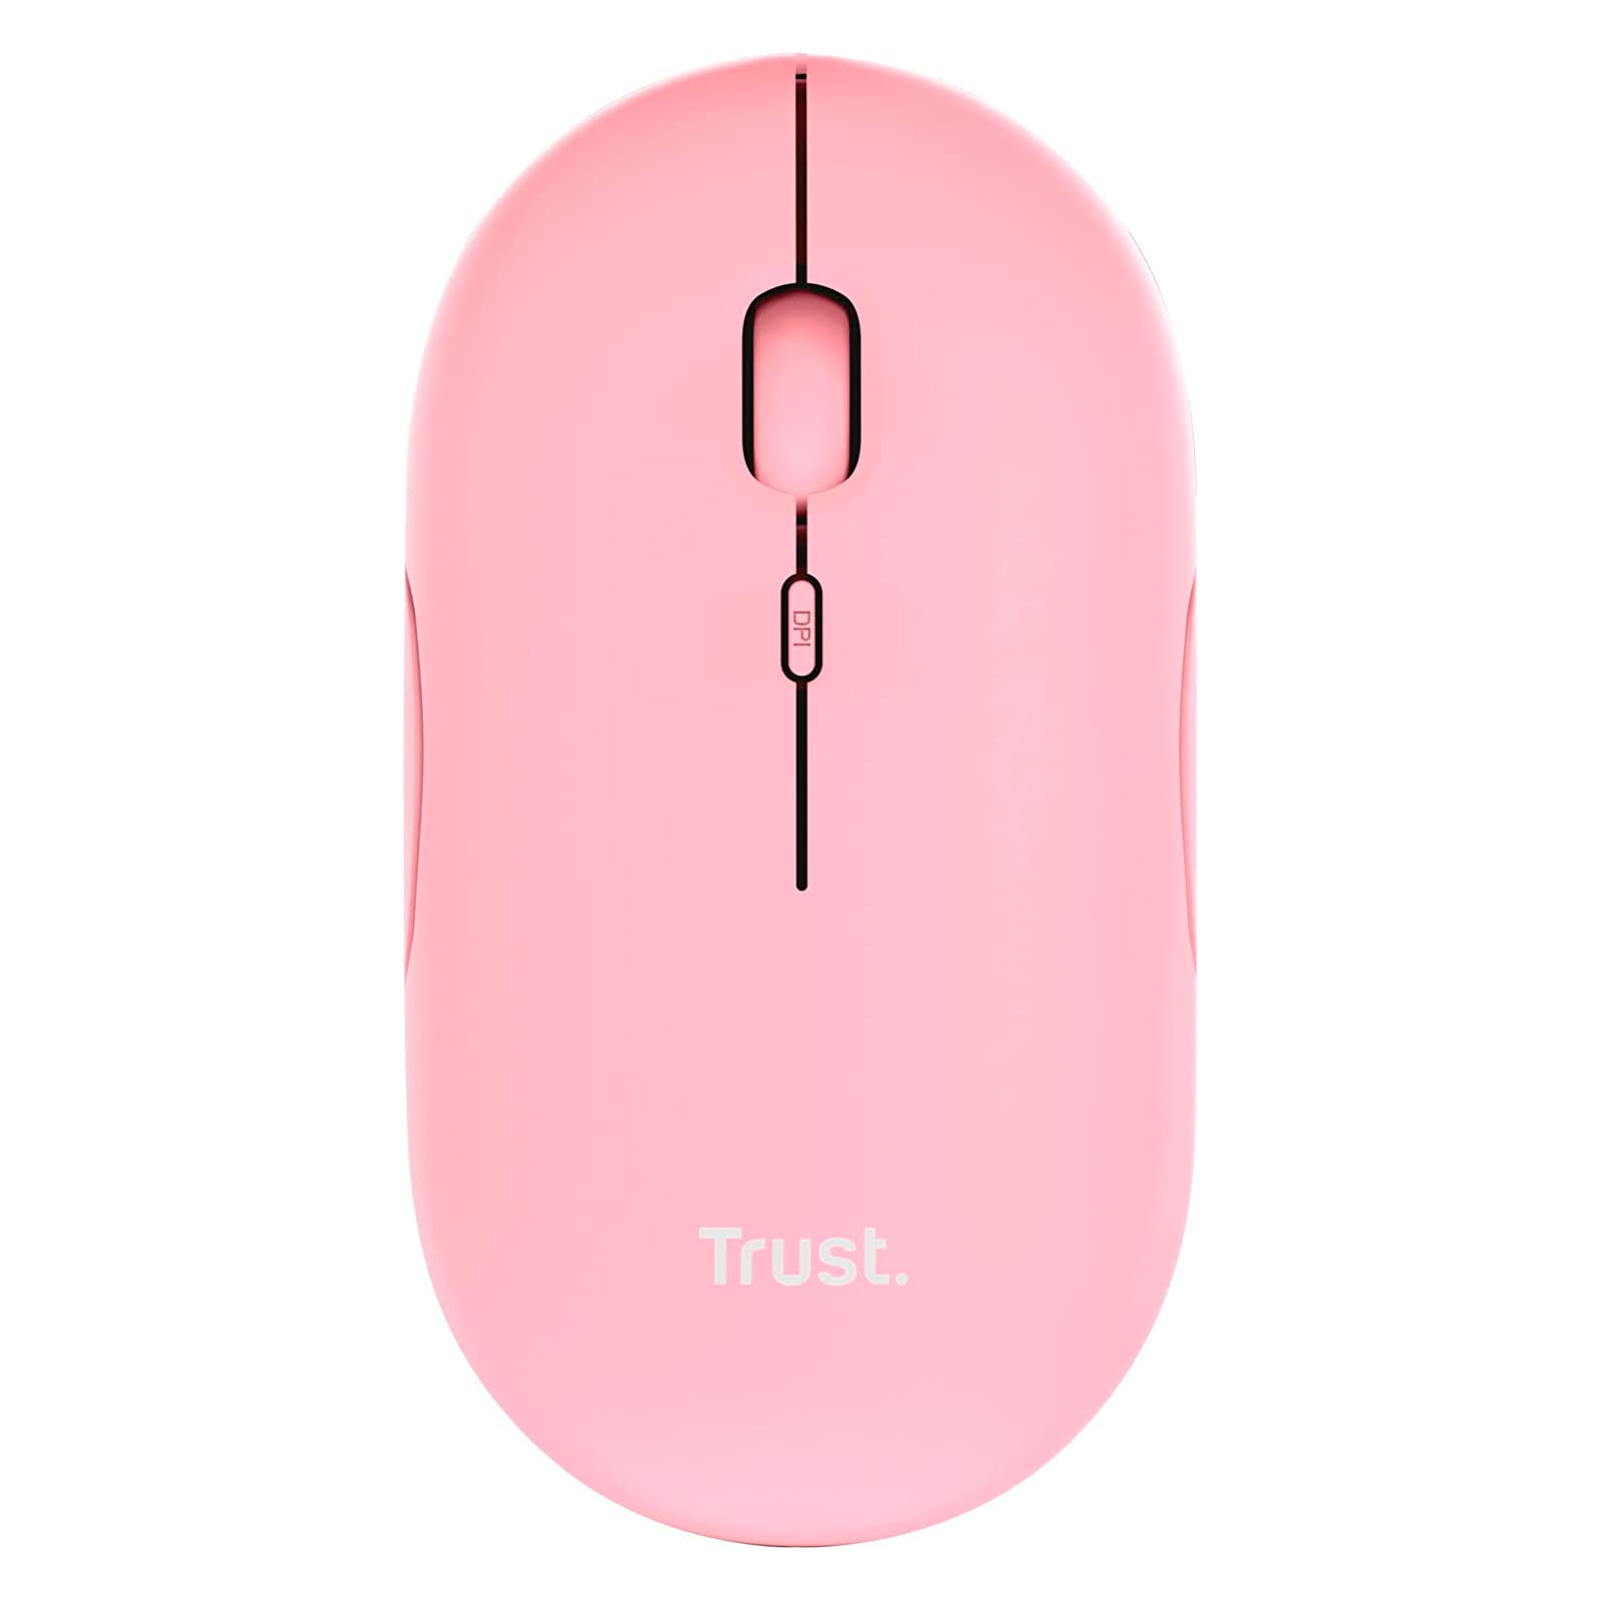 Мышка Trust Puck Wireless/Bluetooth Silent Blue (24126)